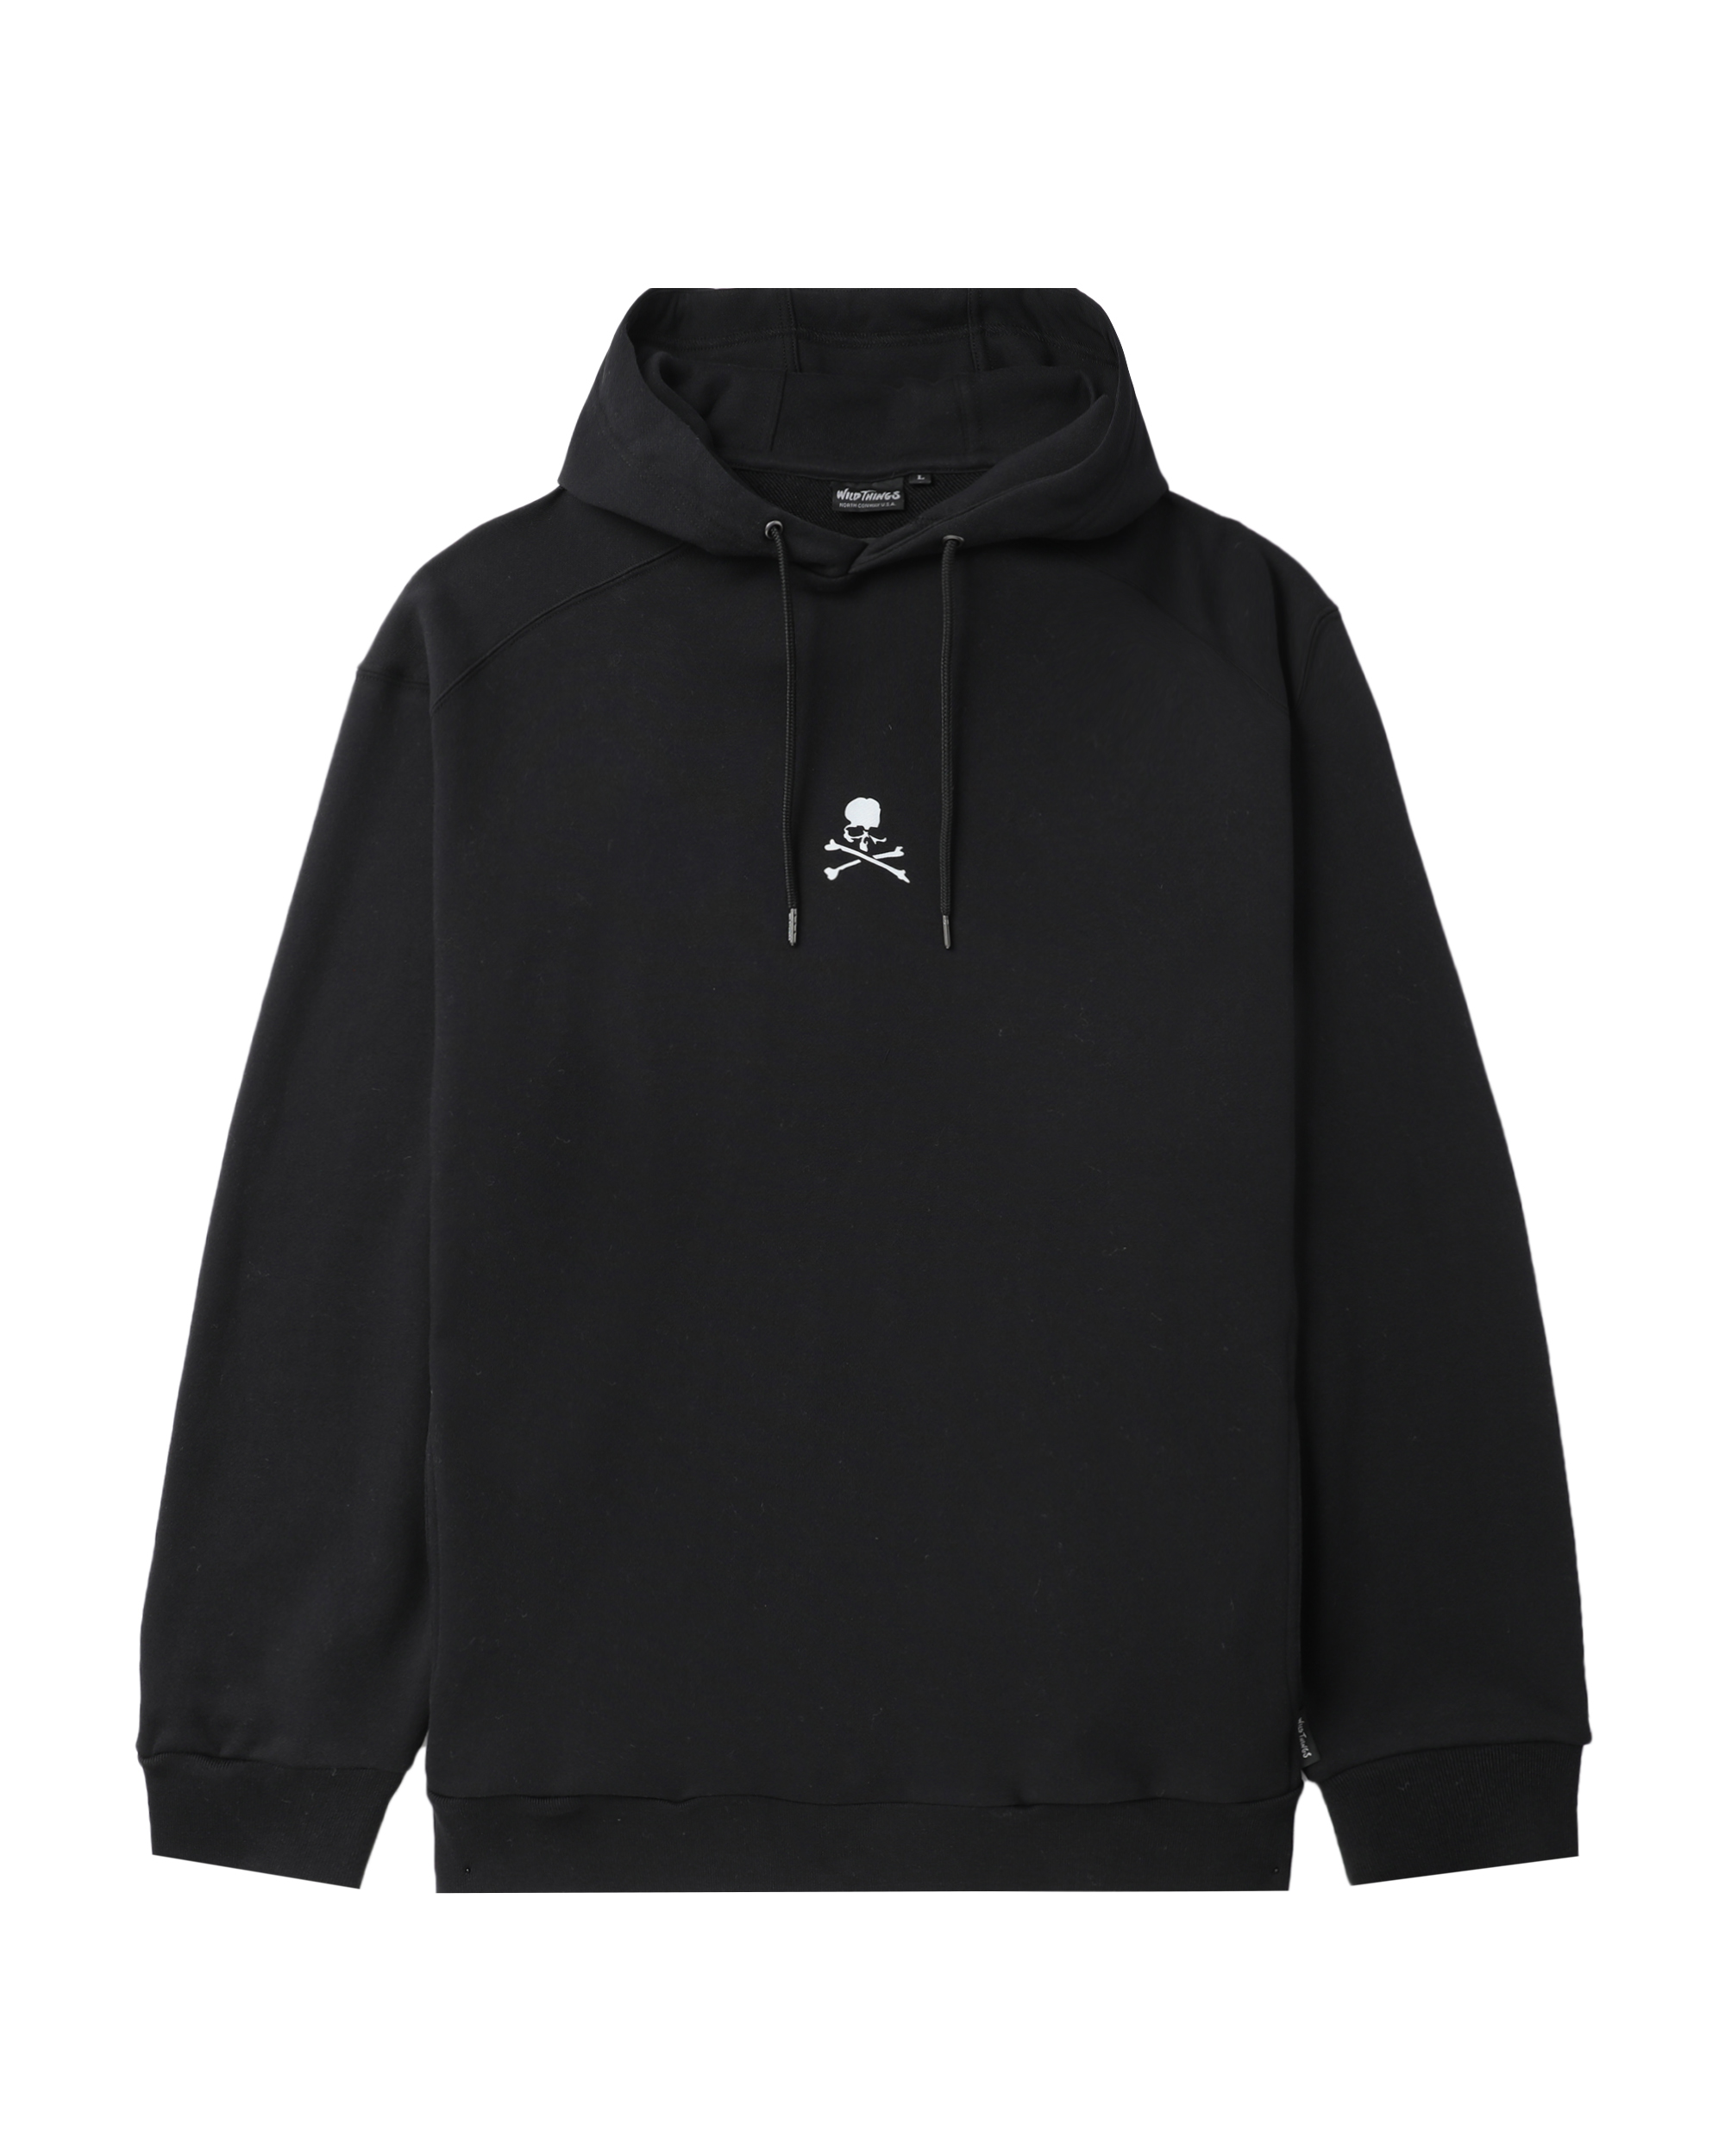 WILD THINGS X mastermind Japan logo hoodie | ITeSHOP